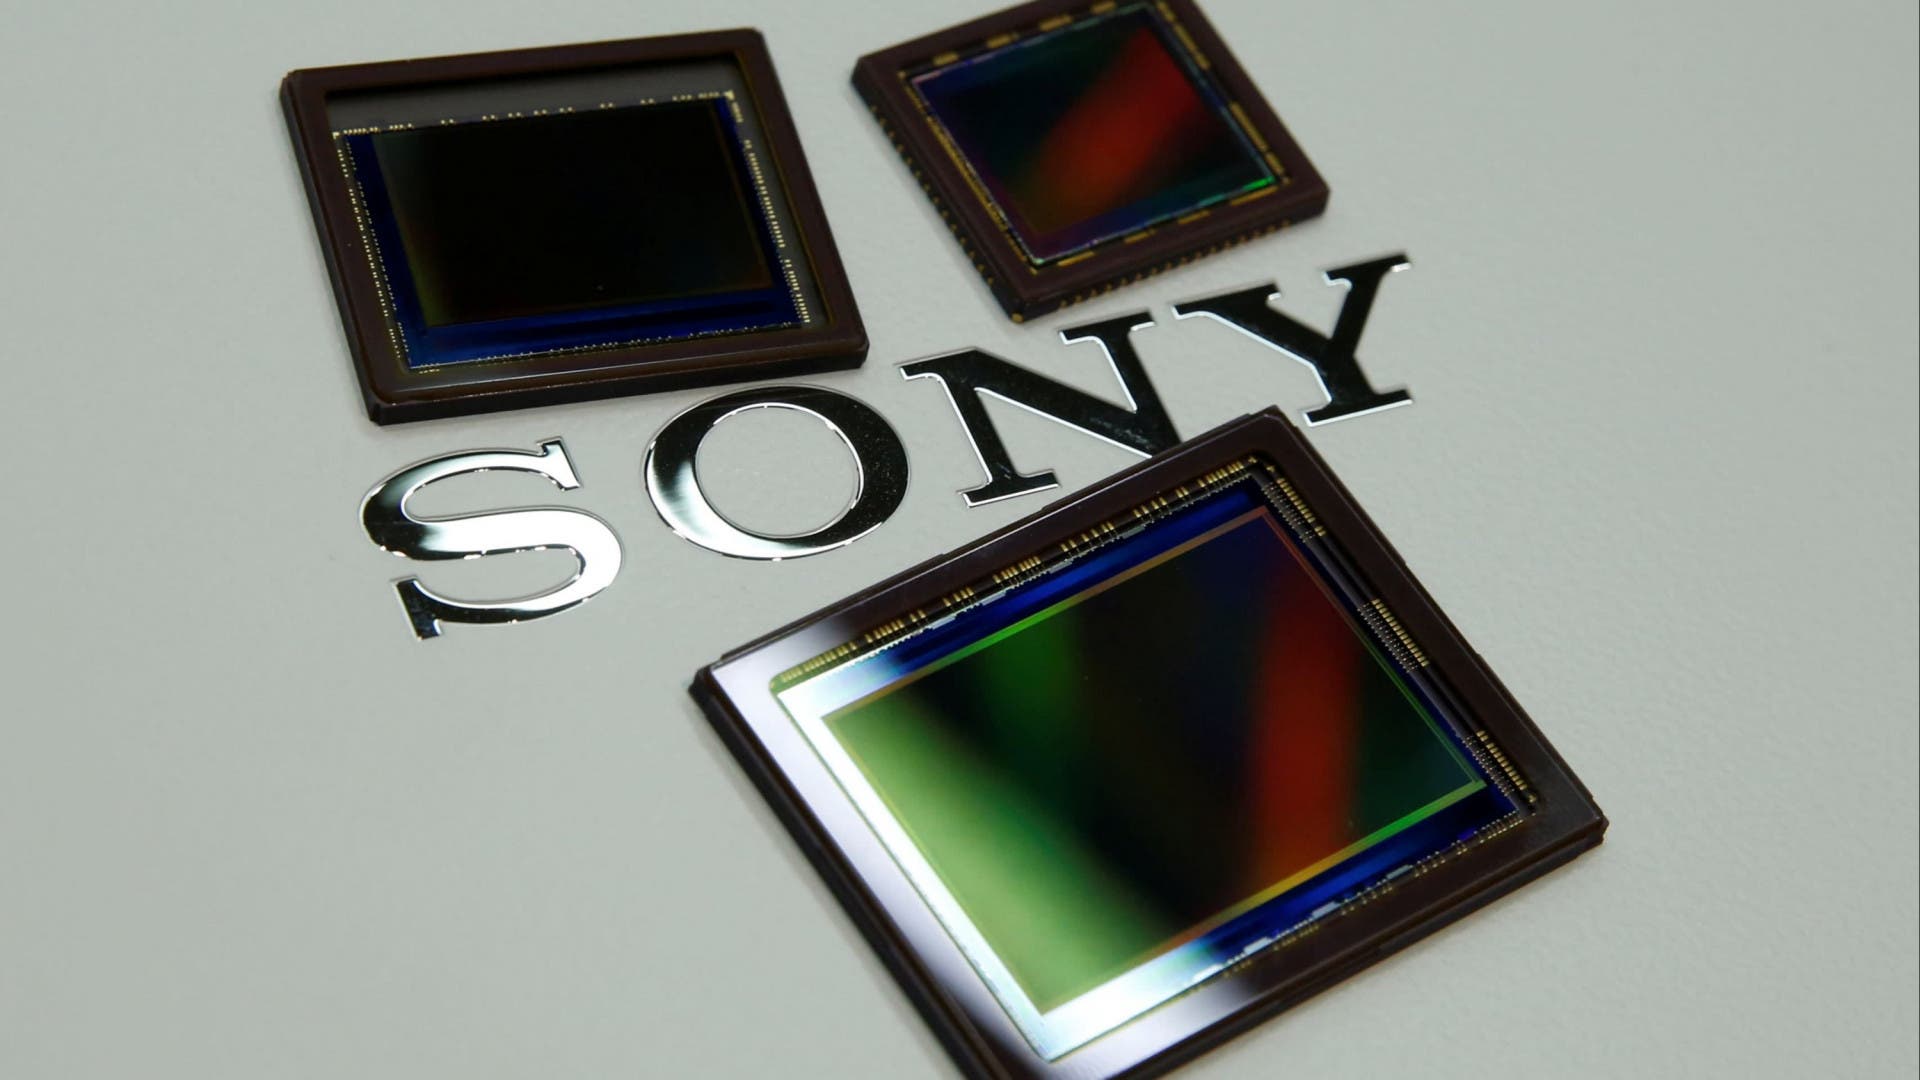 Sony 